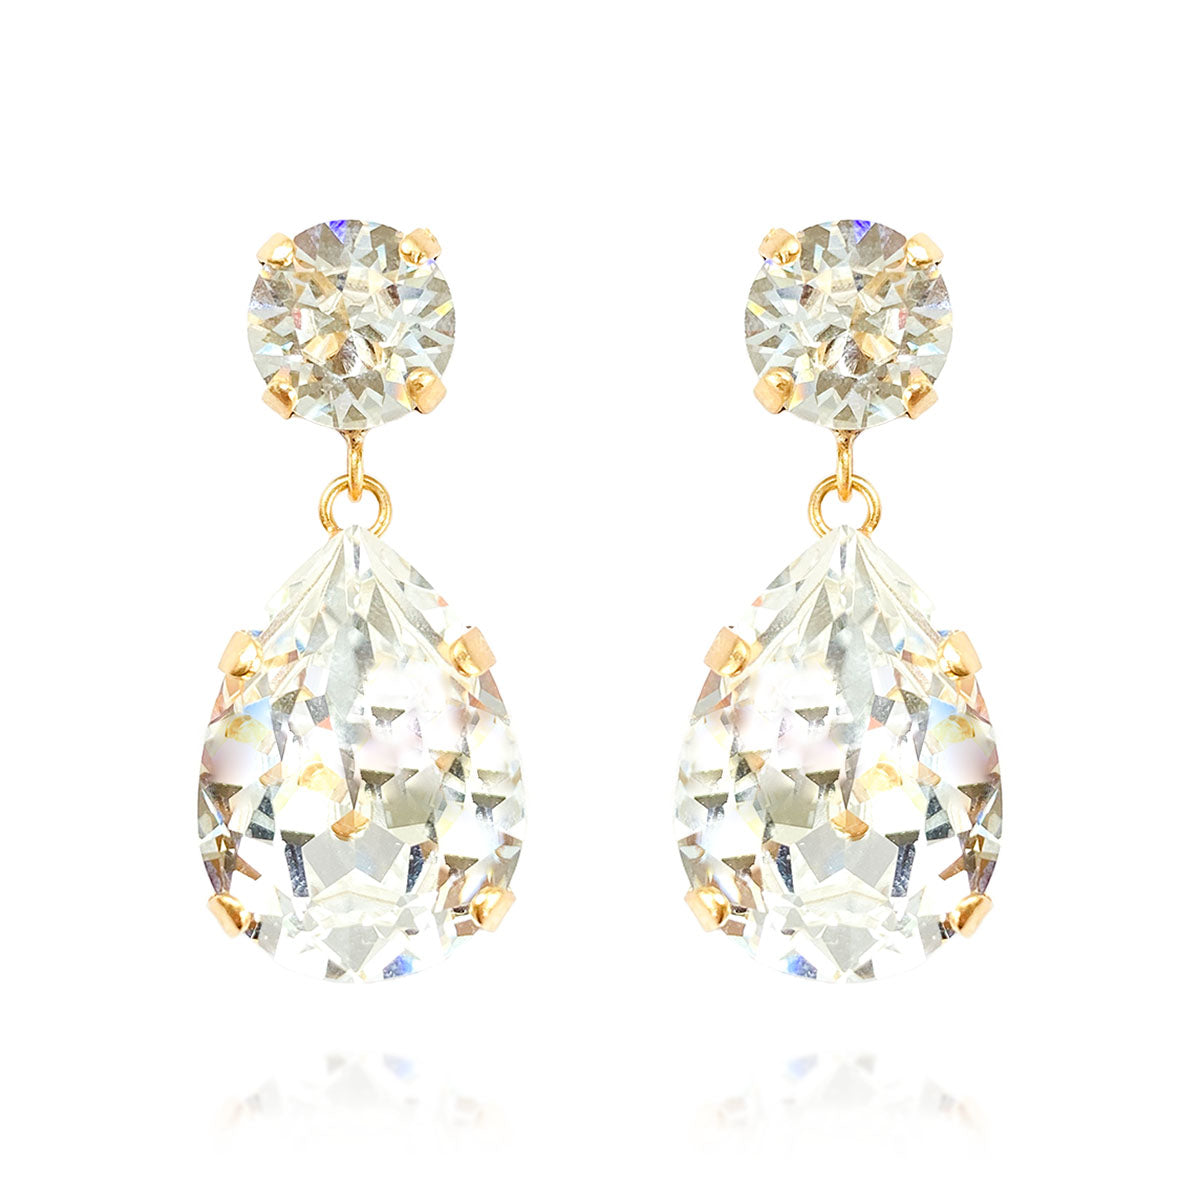 Lola earrings / Crystal clear